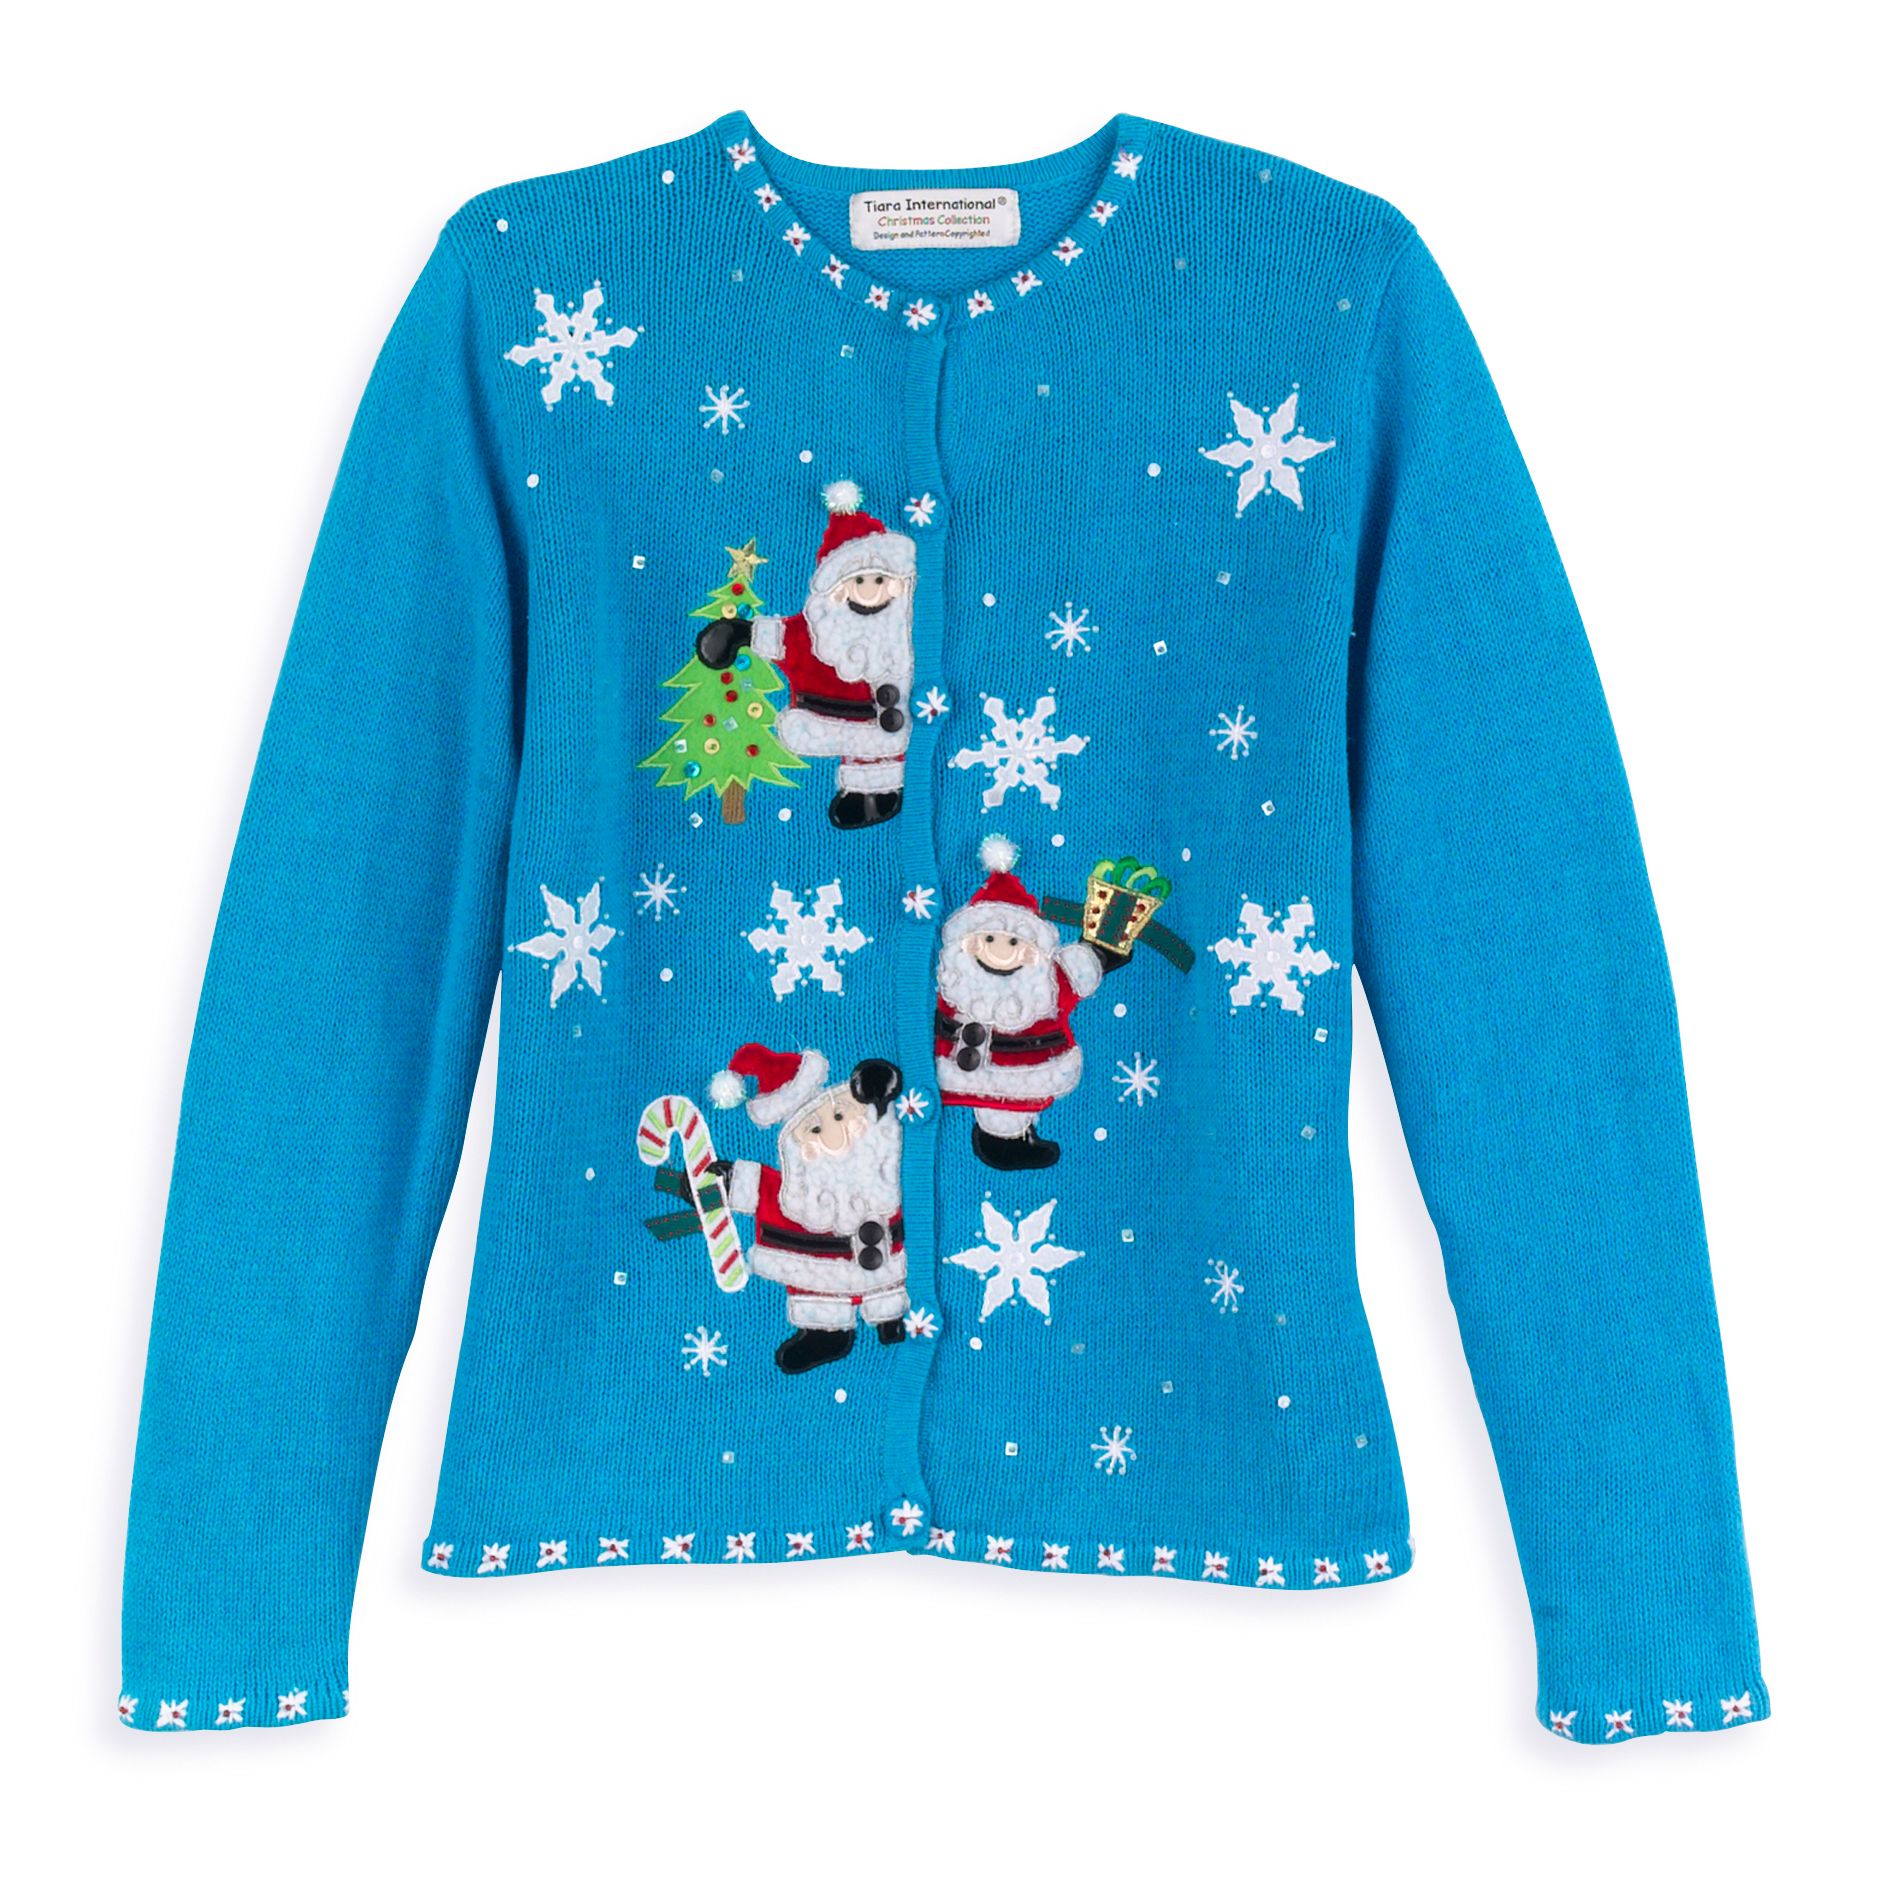 Classic Elements Christmas Sweater - Santa